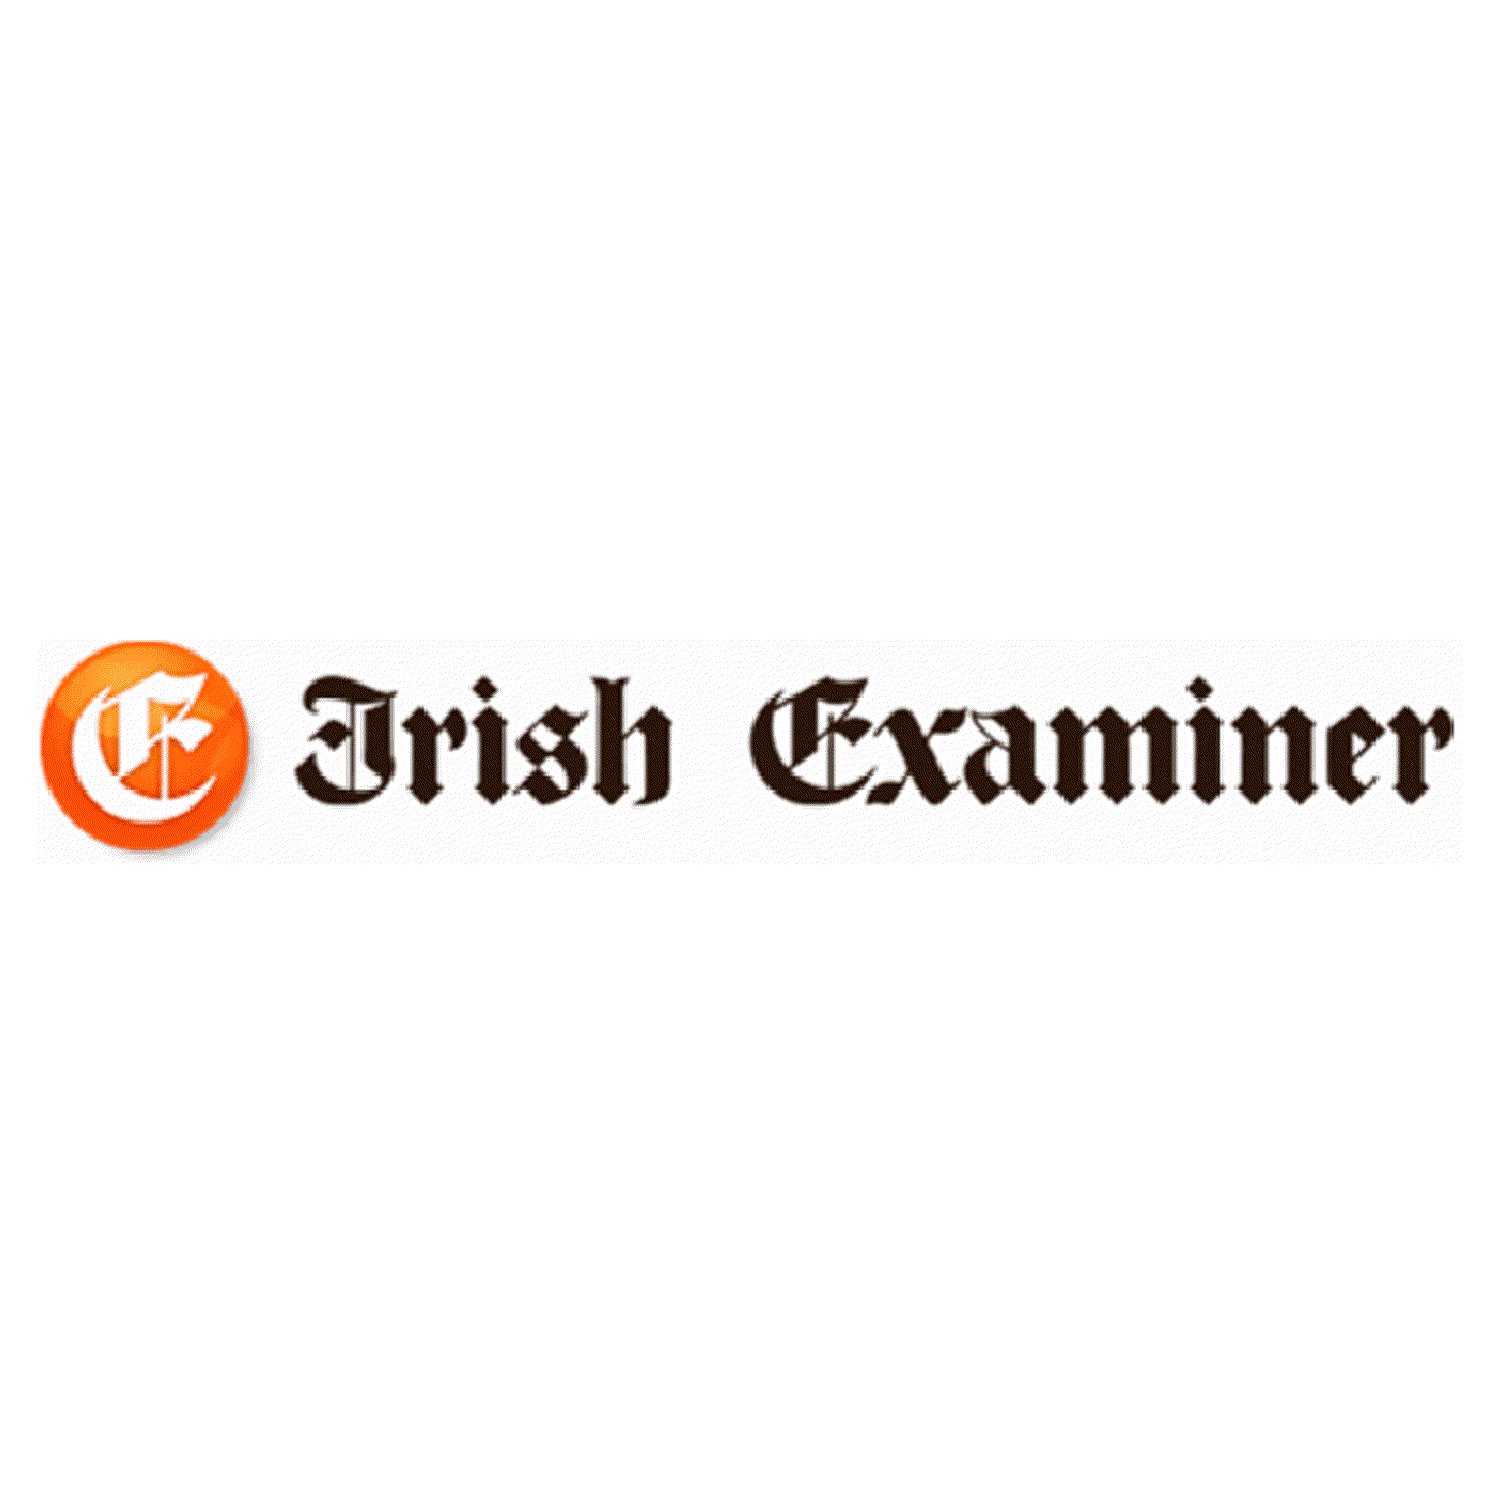 The Irish Examiner Saturday (1 Piece)